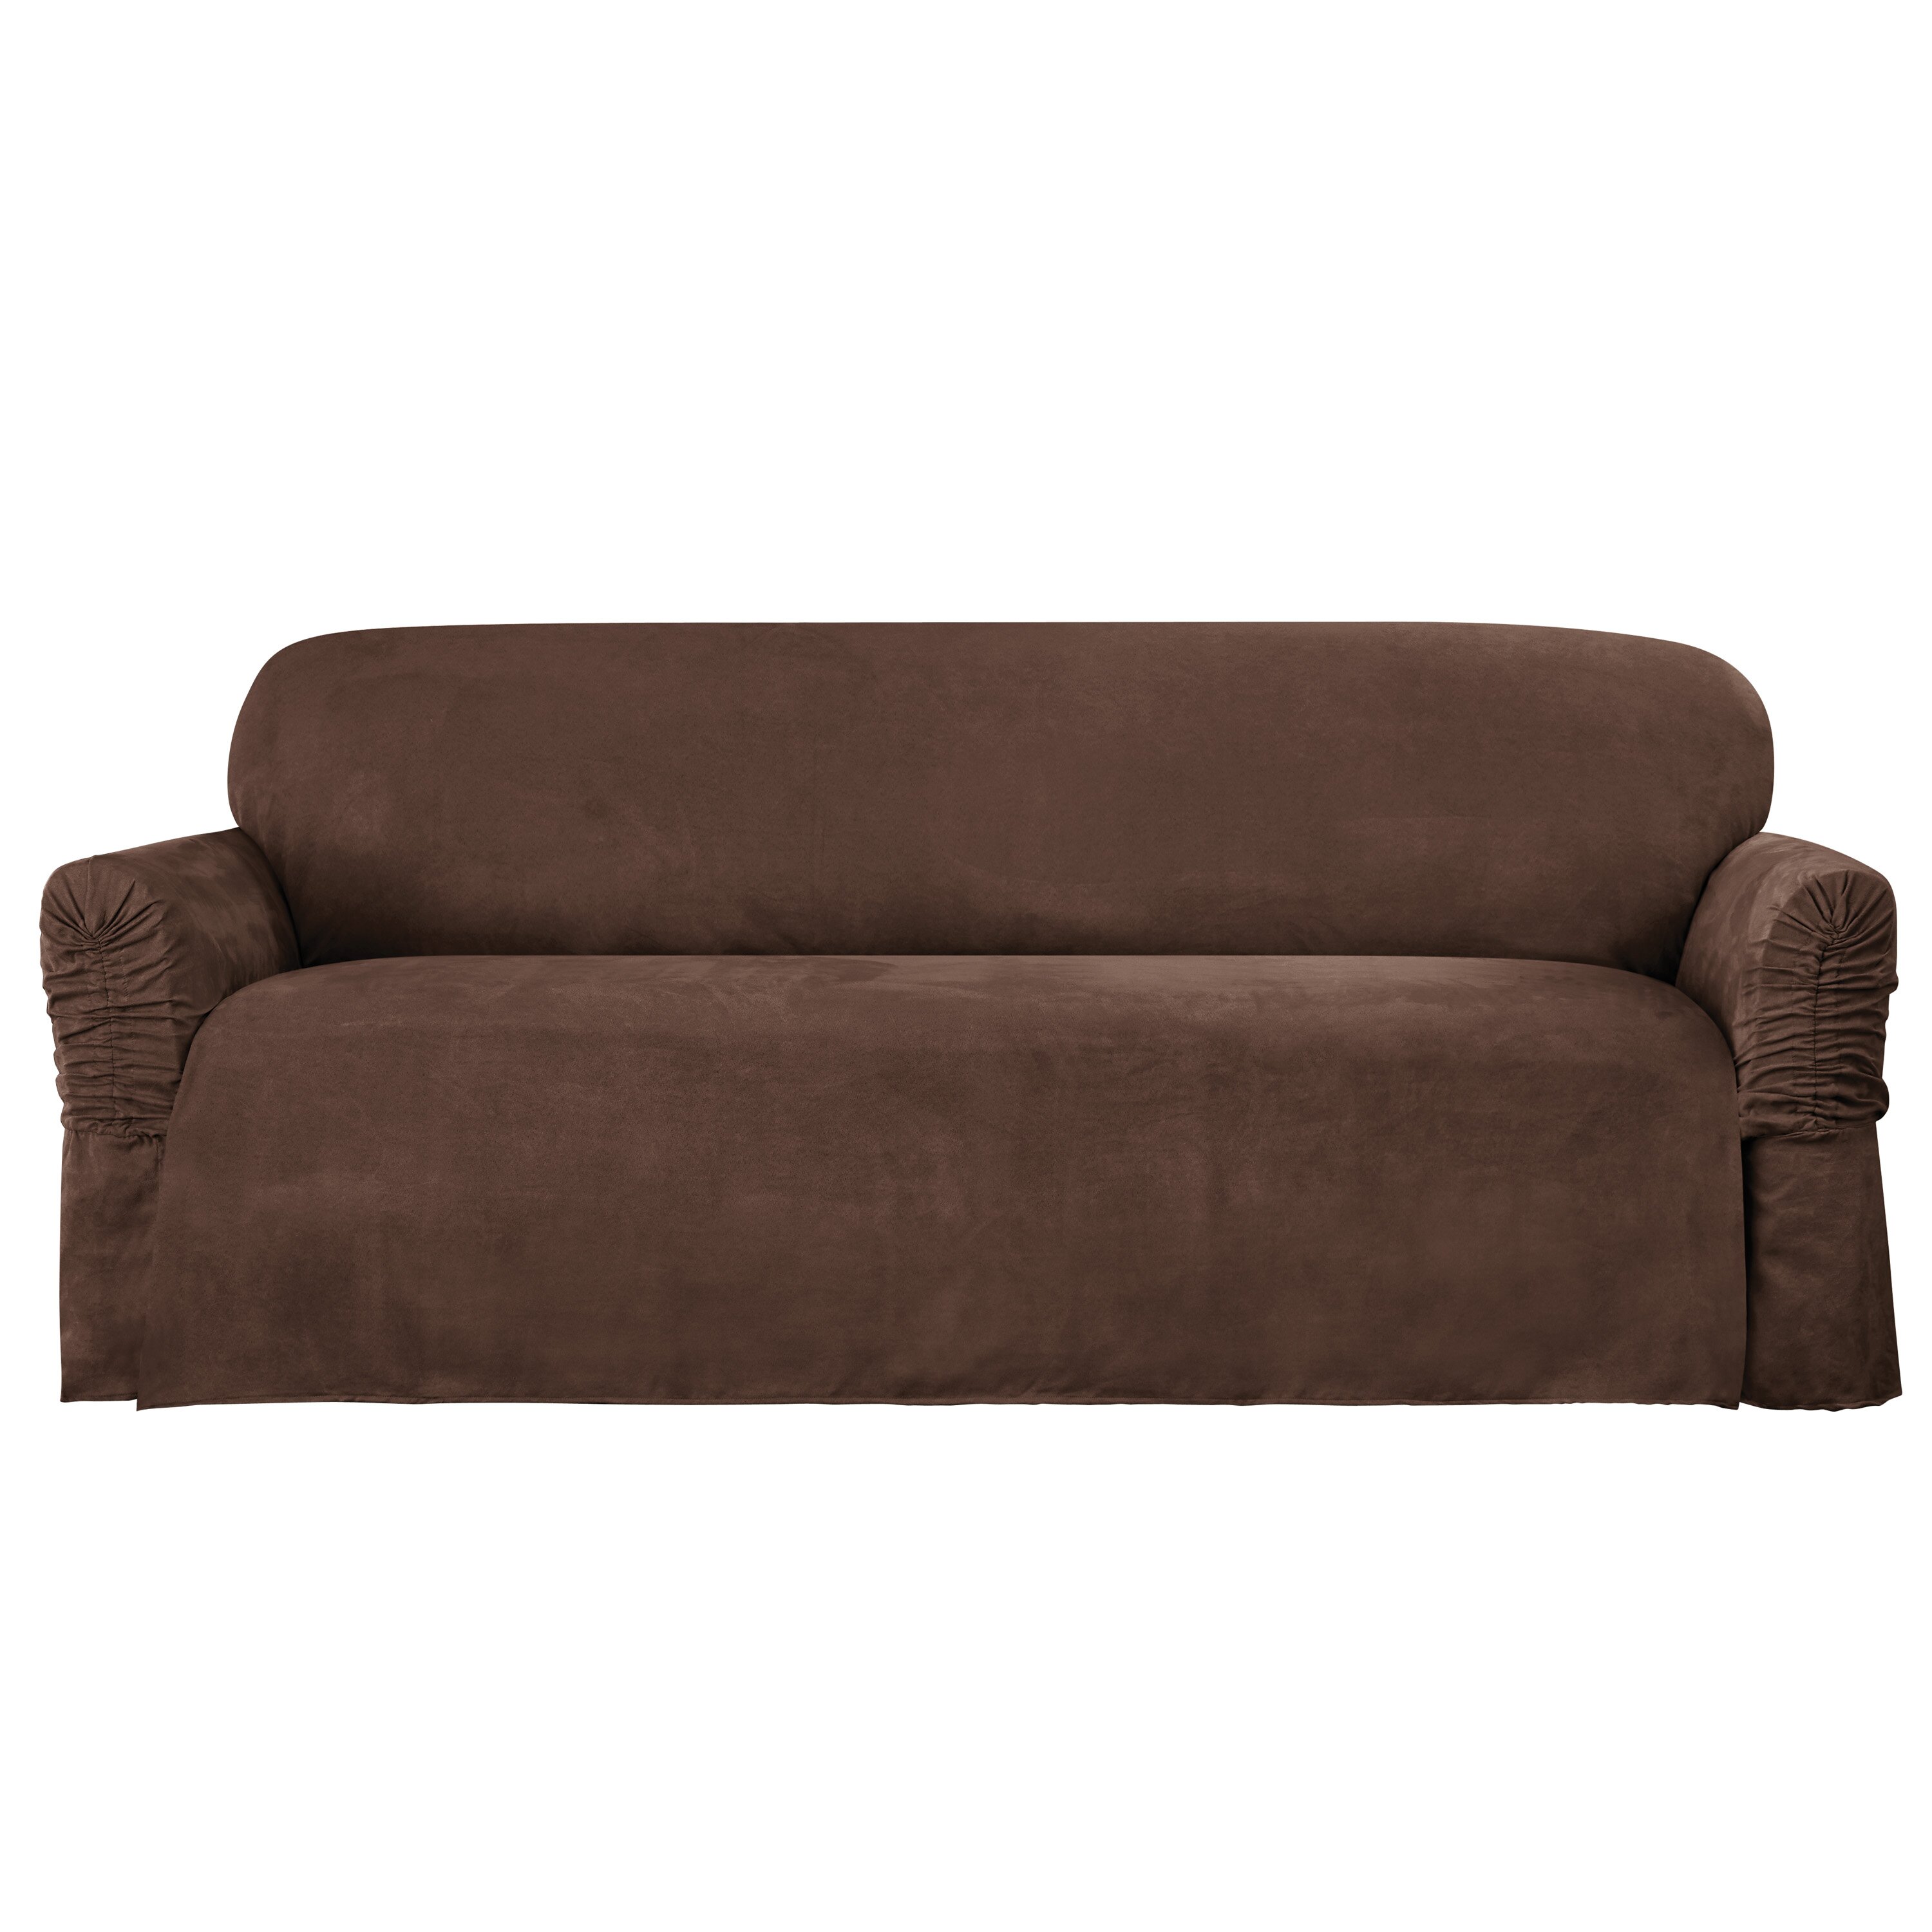 Sectional Sofas Cover Upholstery Wayfair Sectional Sofa ...